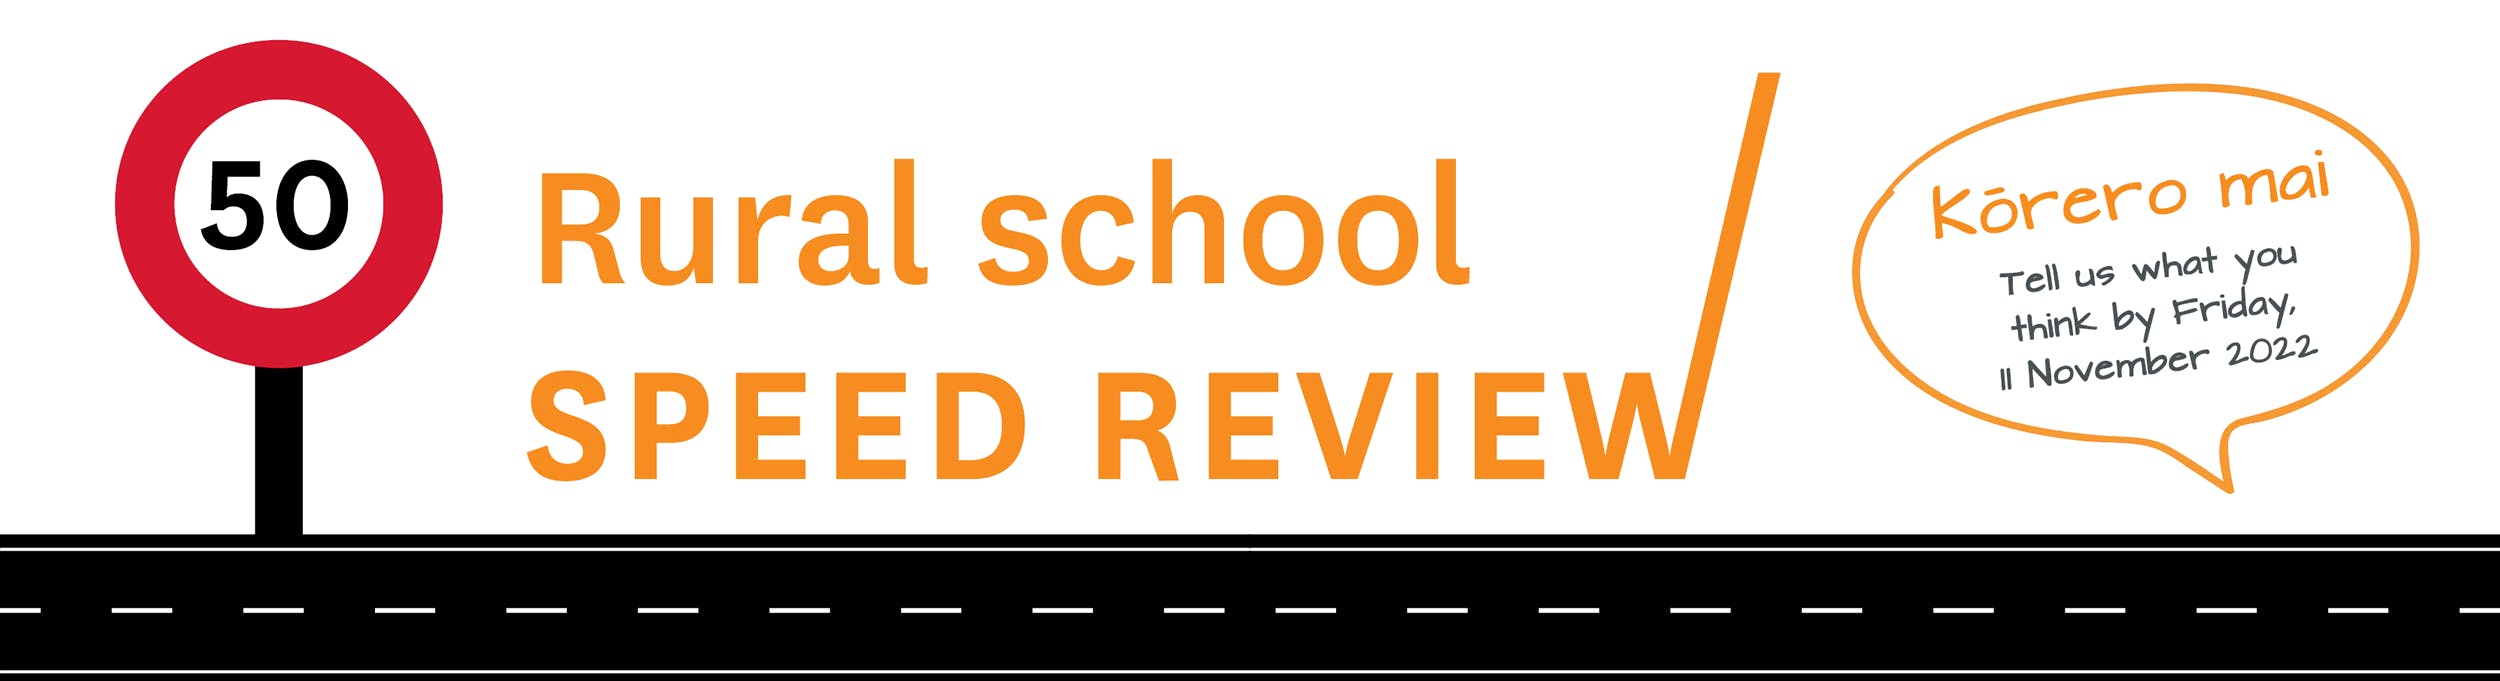 Rural School Speed Review Banner